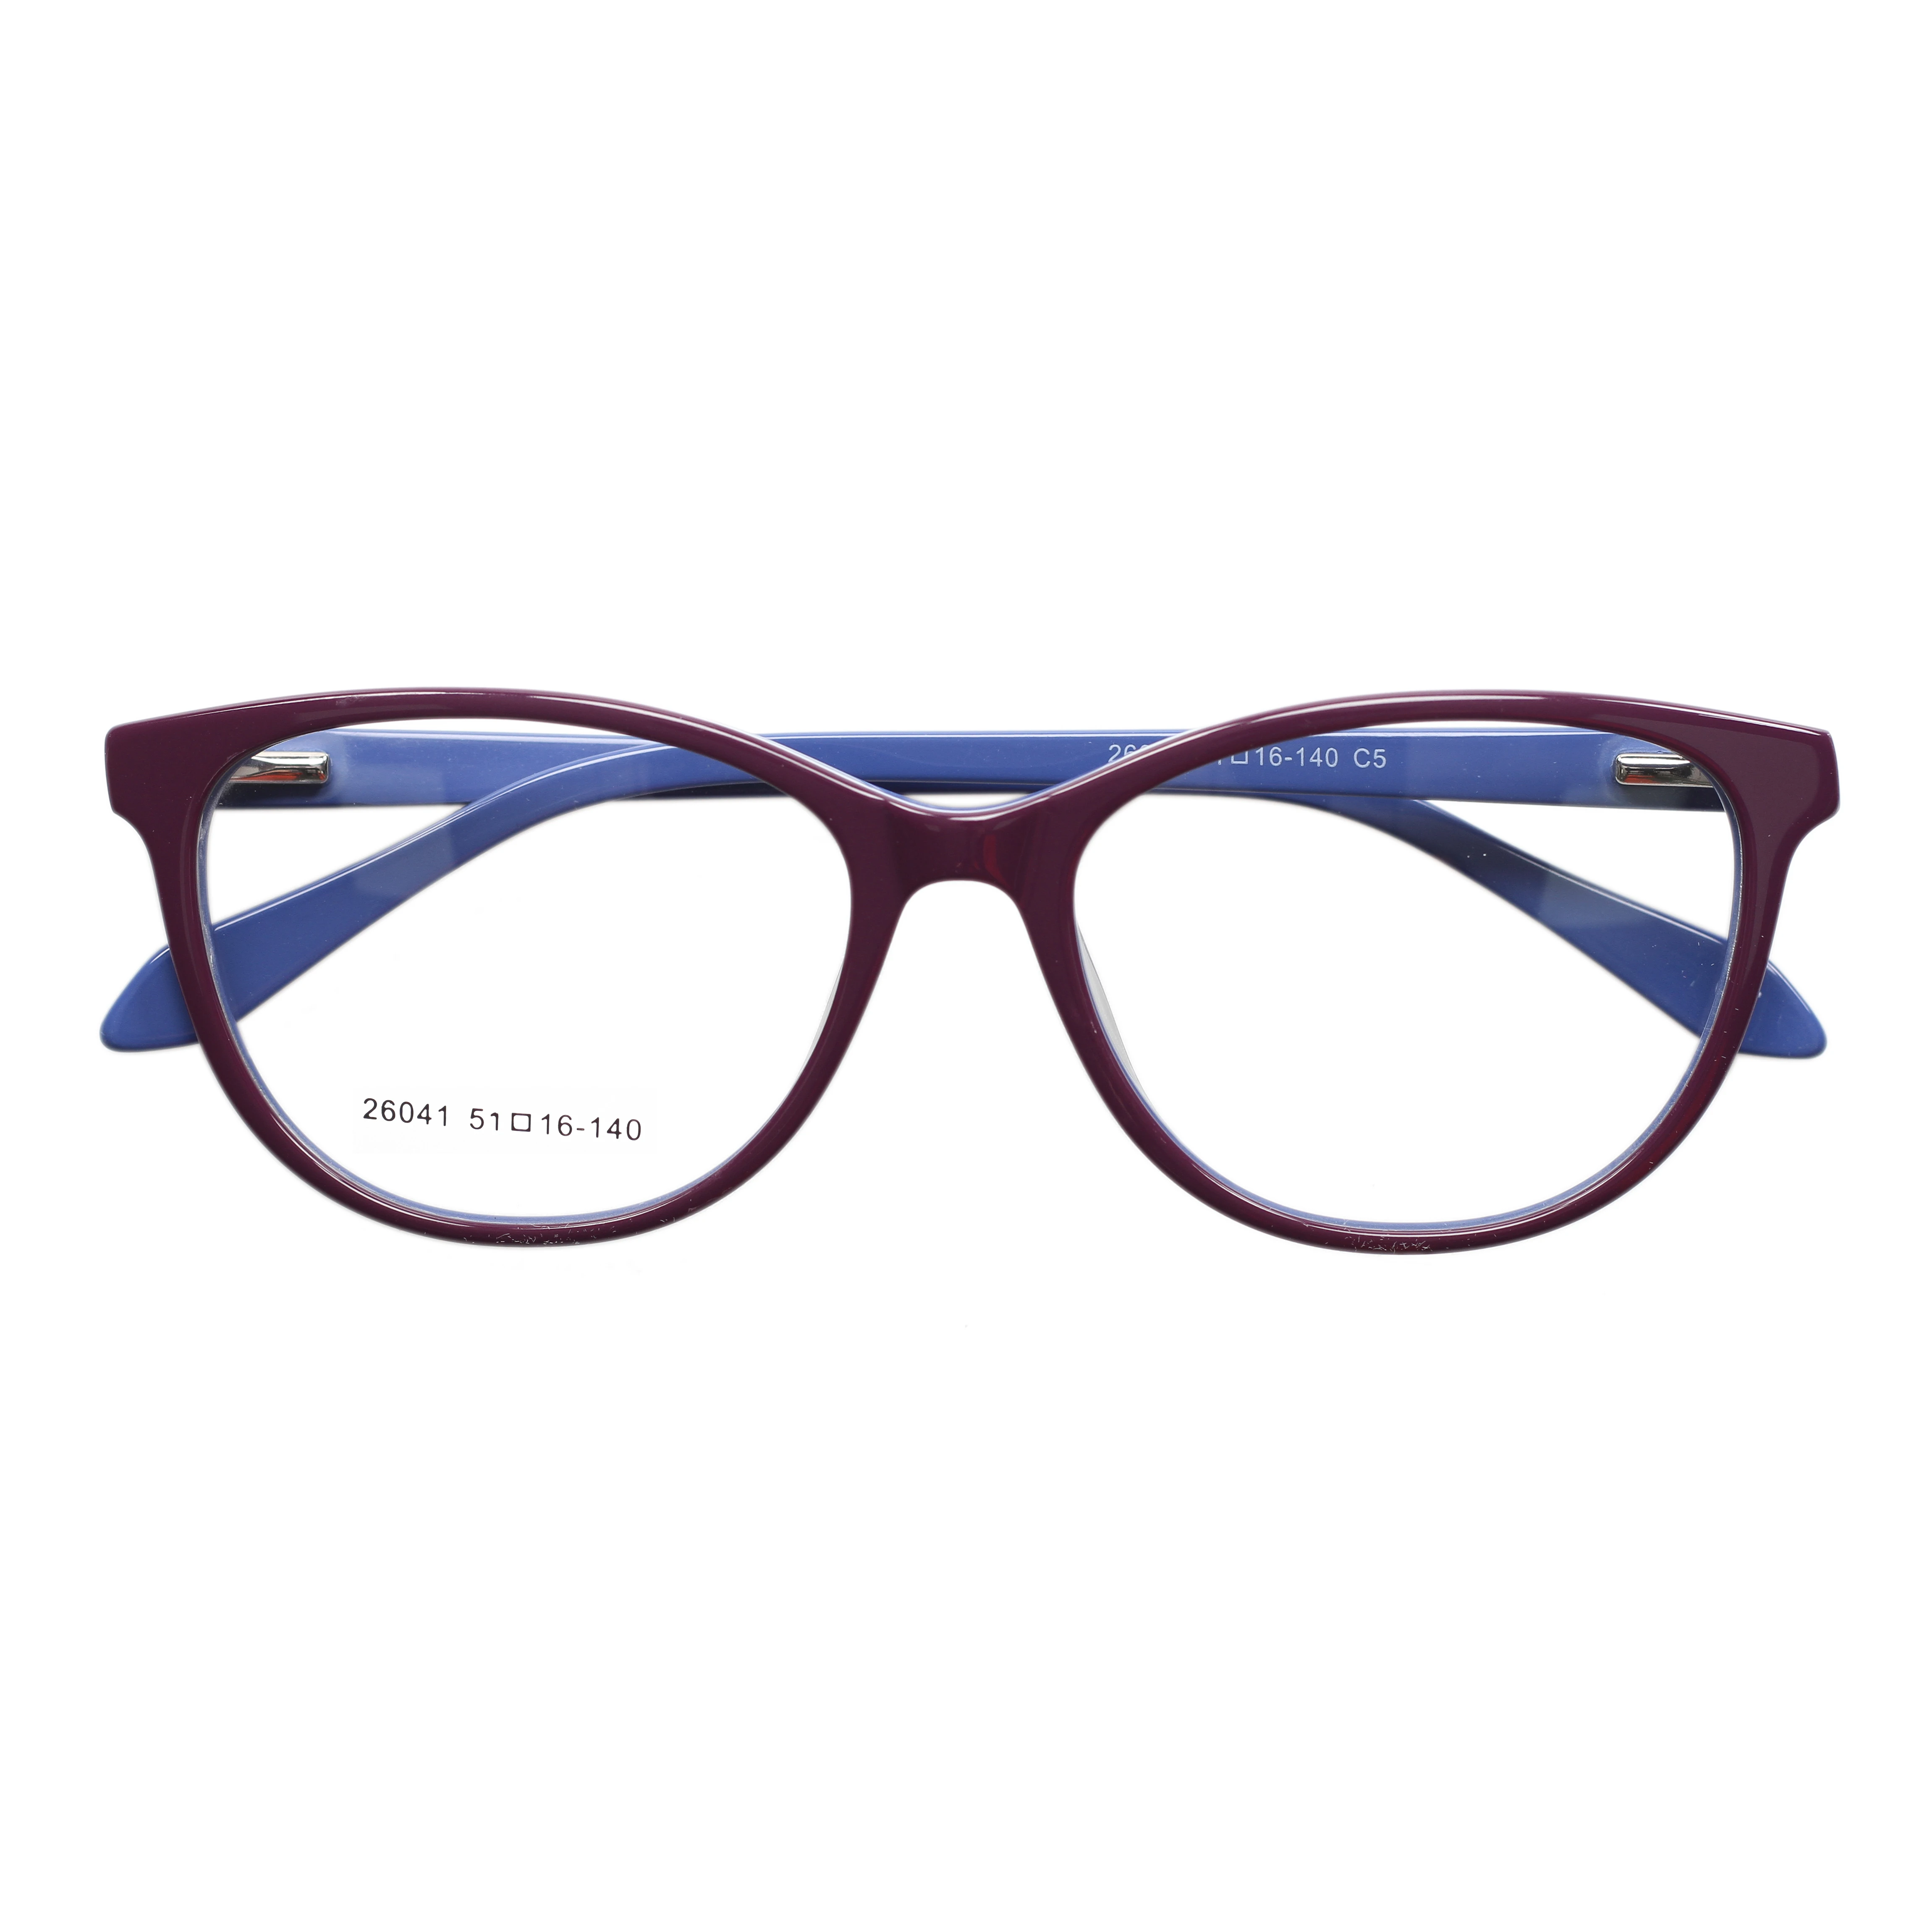 New arrival classical design multi colors acetate eyewear glasses frames In stock